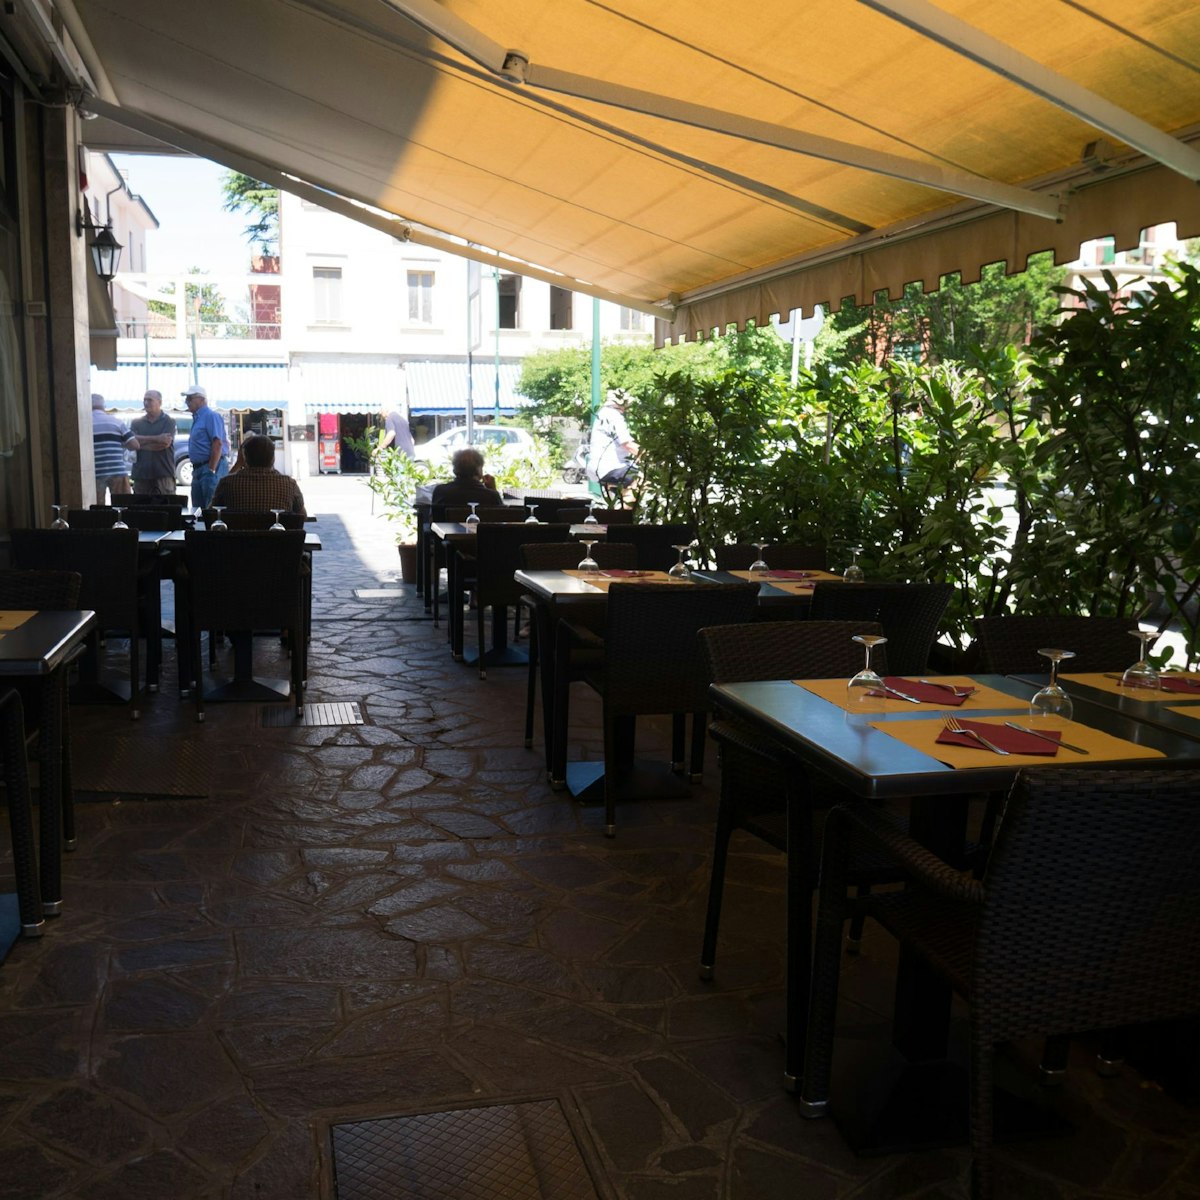 Da Cri Cri e Tendina has plenty of outdoor seating in summer months